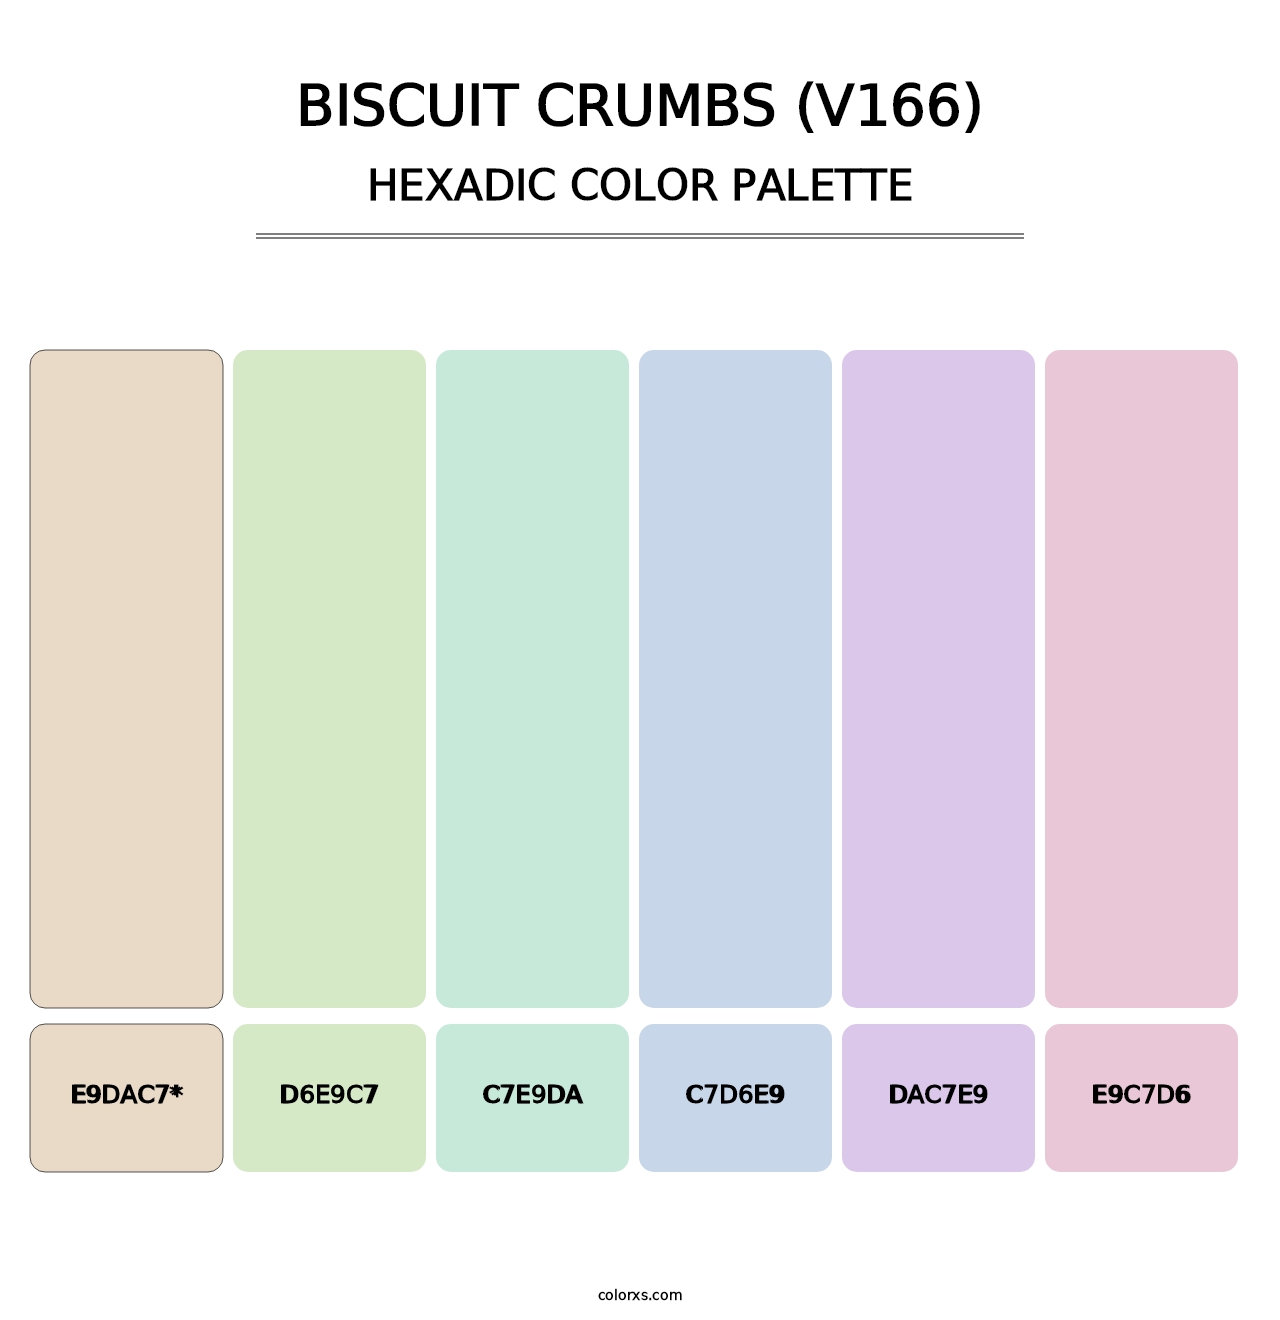 Biscuit Crumbs (V166) - Hexadic Color Palette